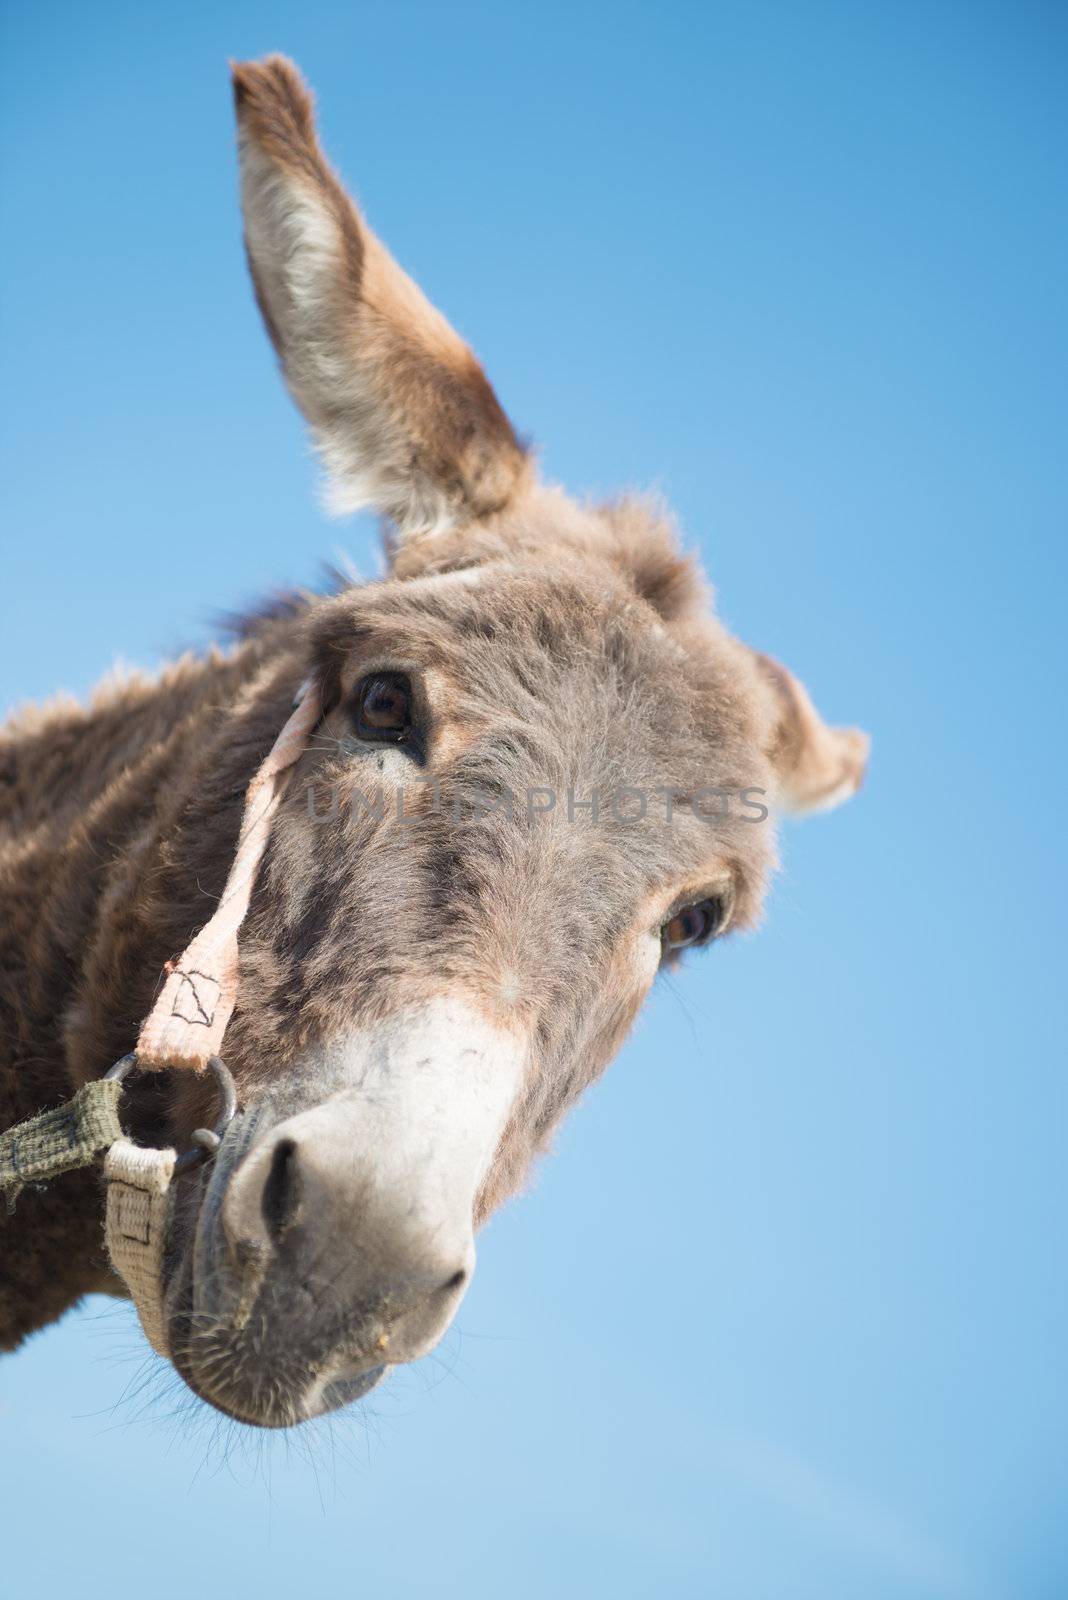 Head of donkey on a background blue sky